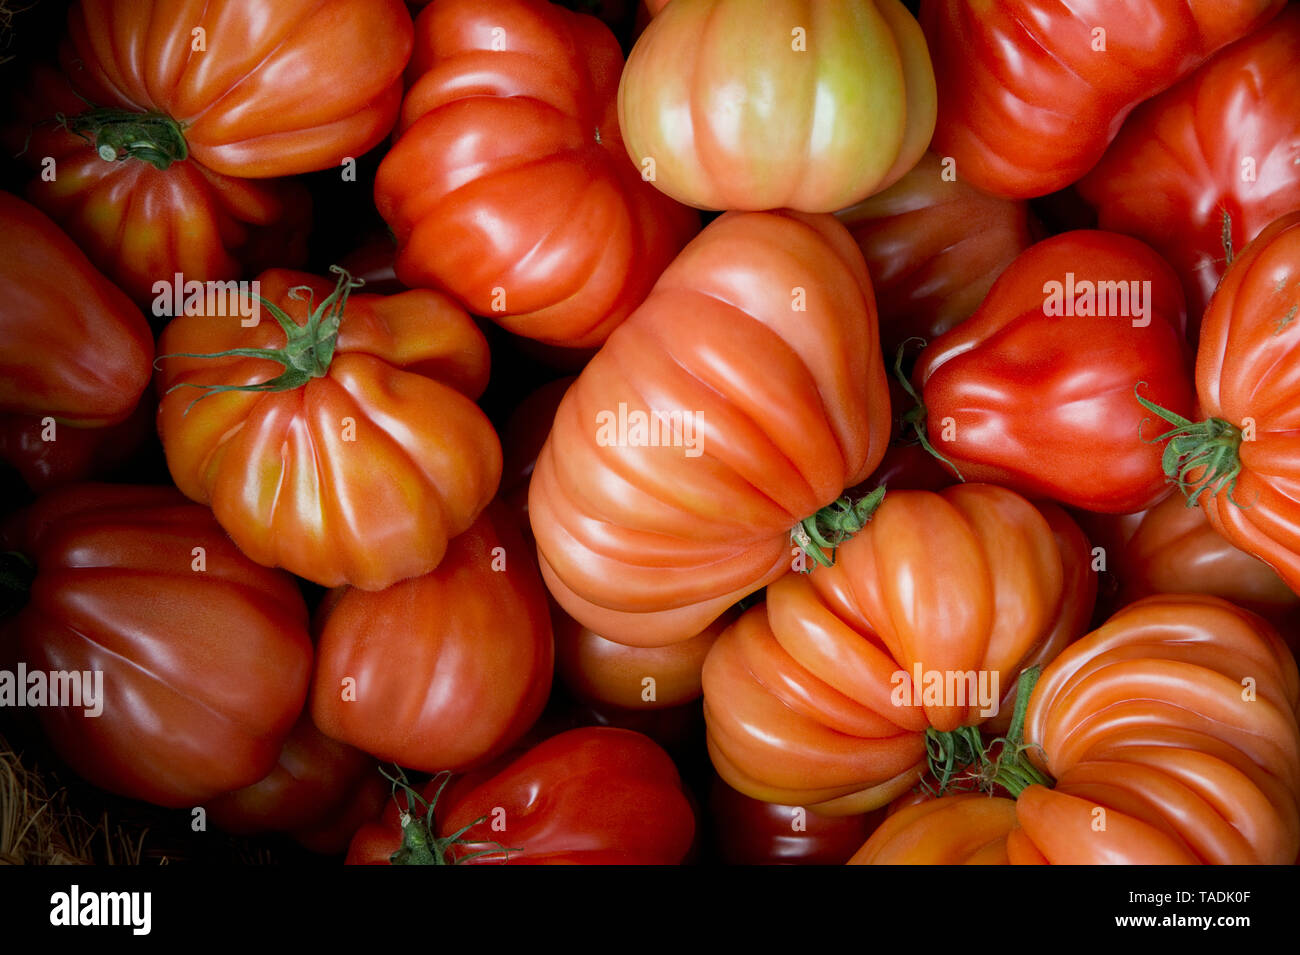 Oxheart tomatoes on market Stock Photo